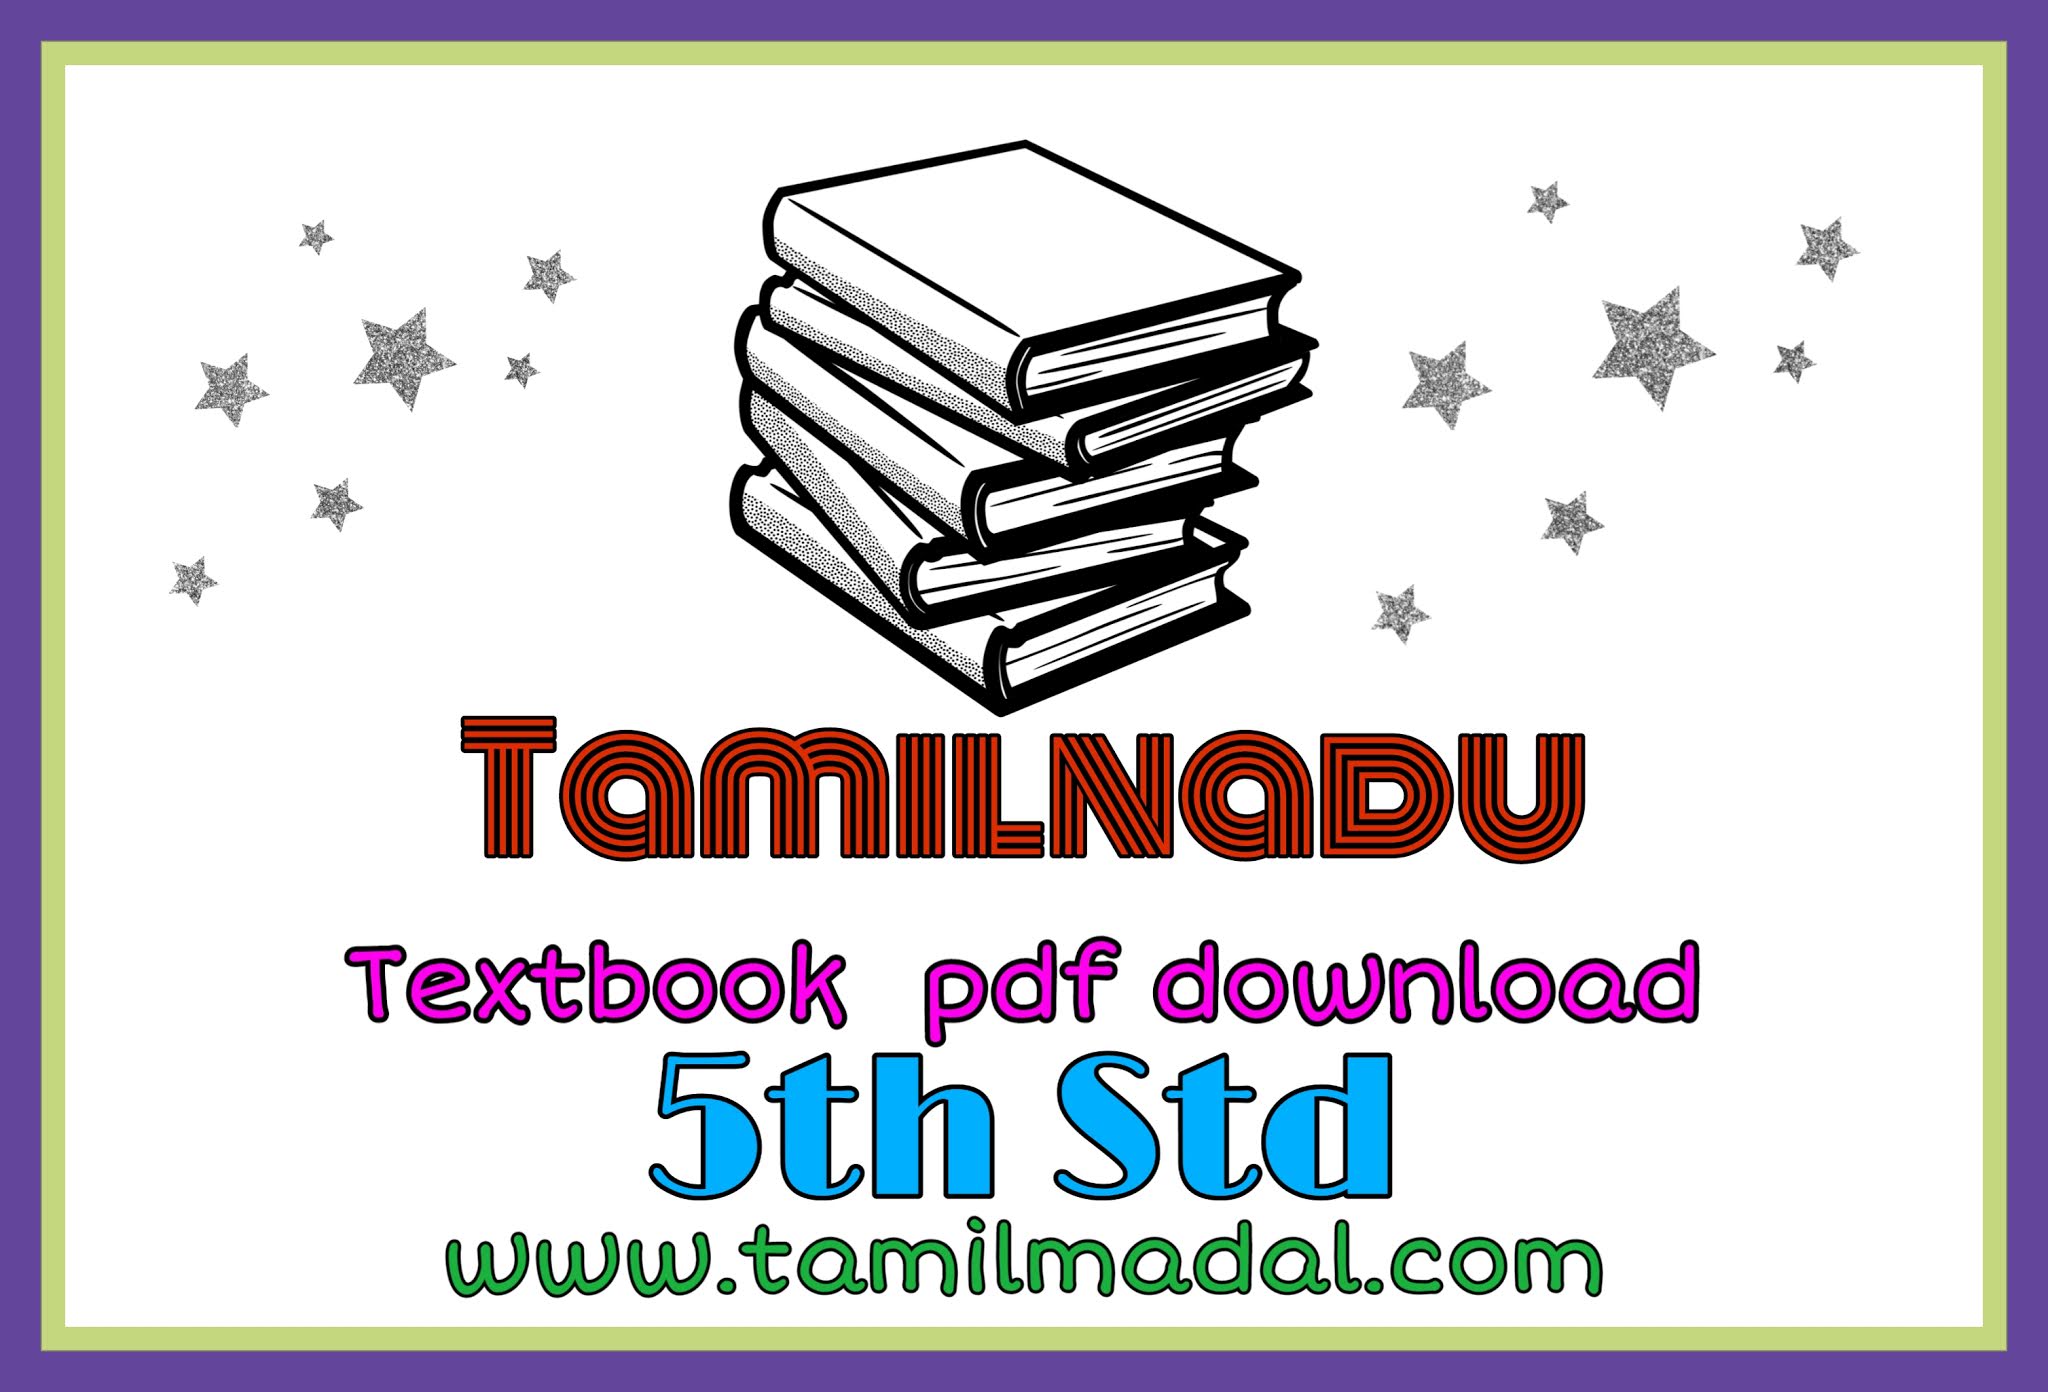 Textbook pdf torrents rosetta stone hebrew torrent for mac